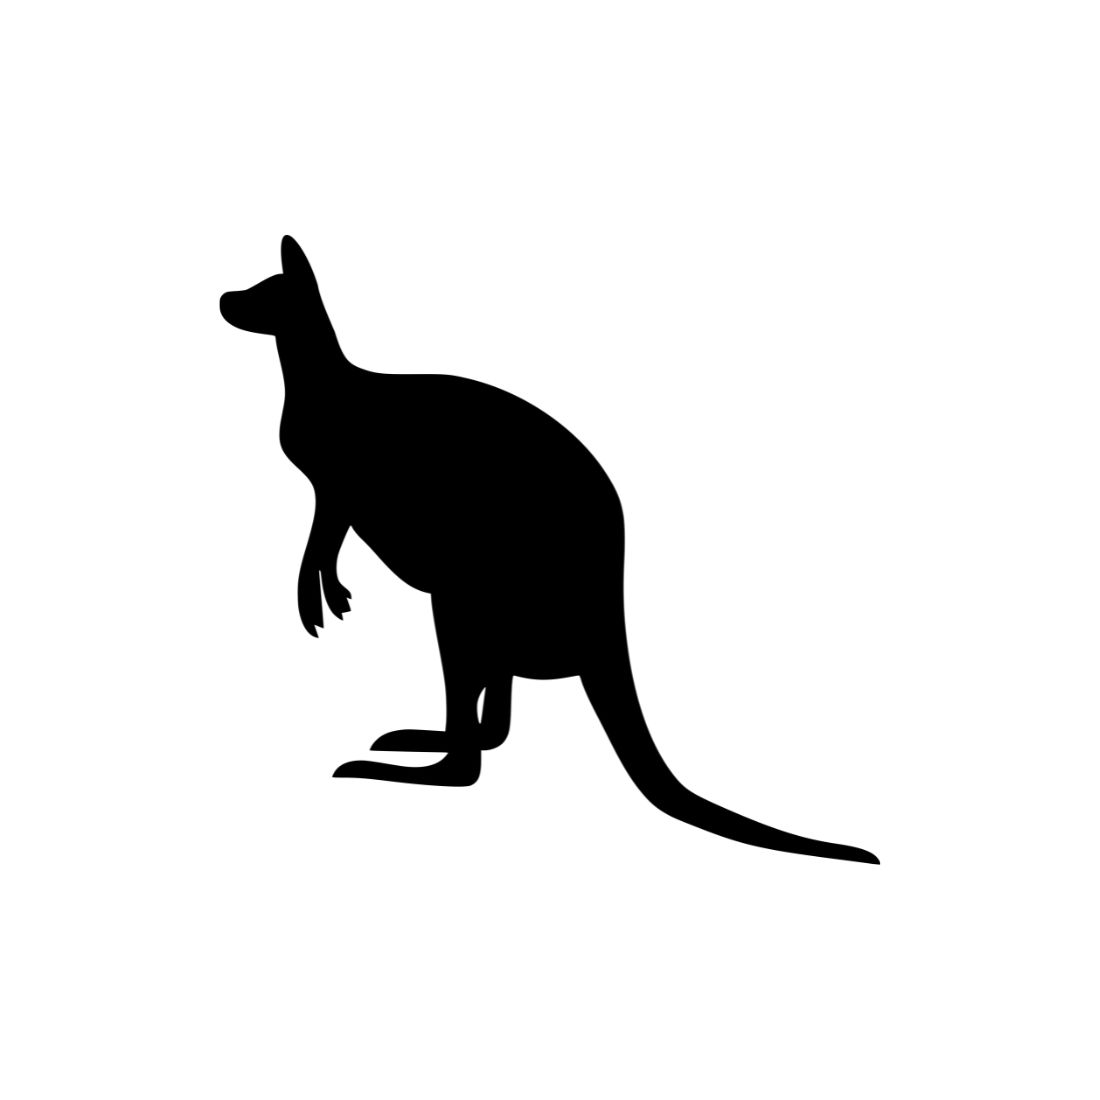 Kangaroo Silhouette set.